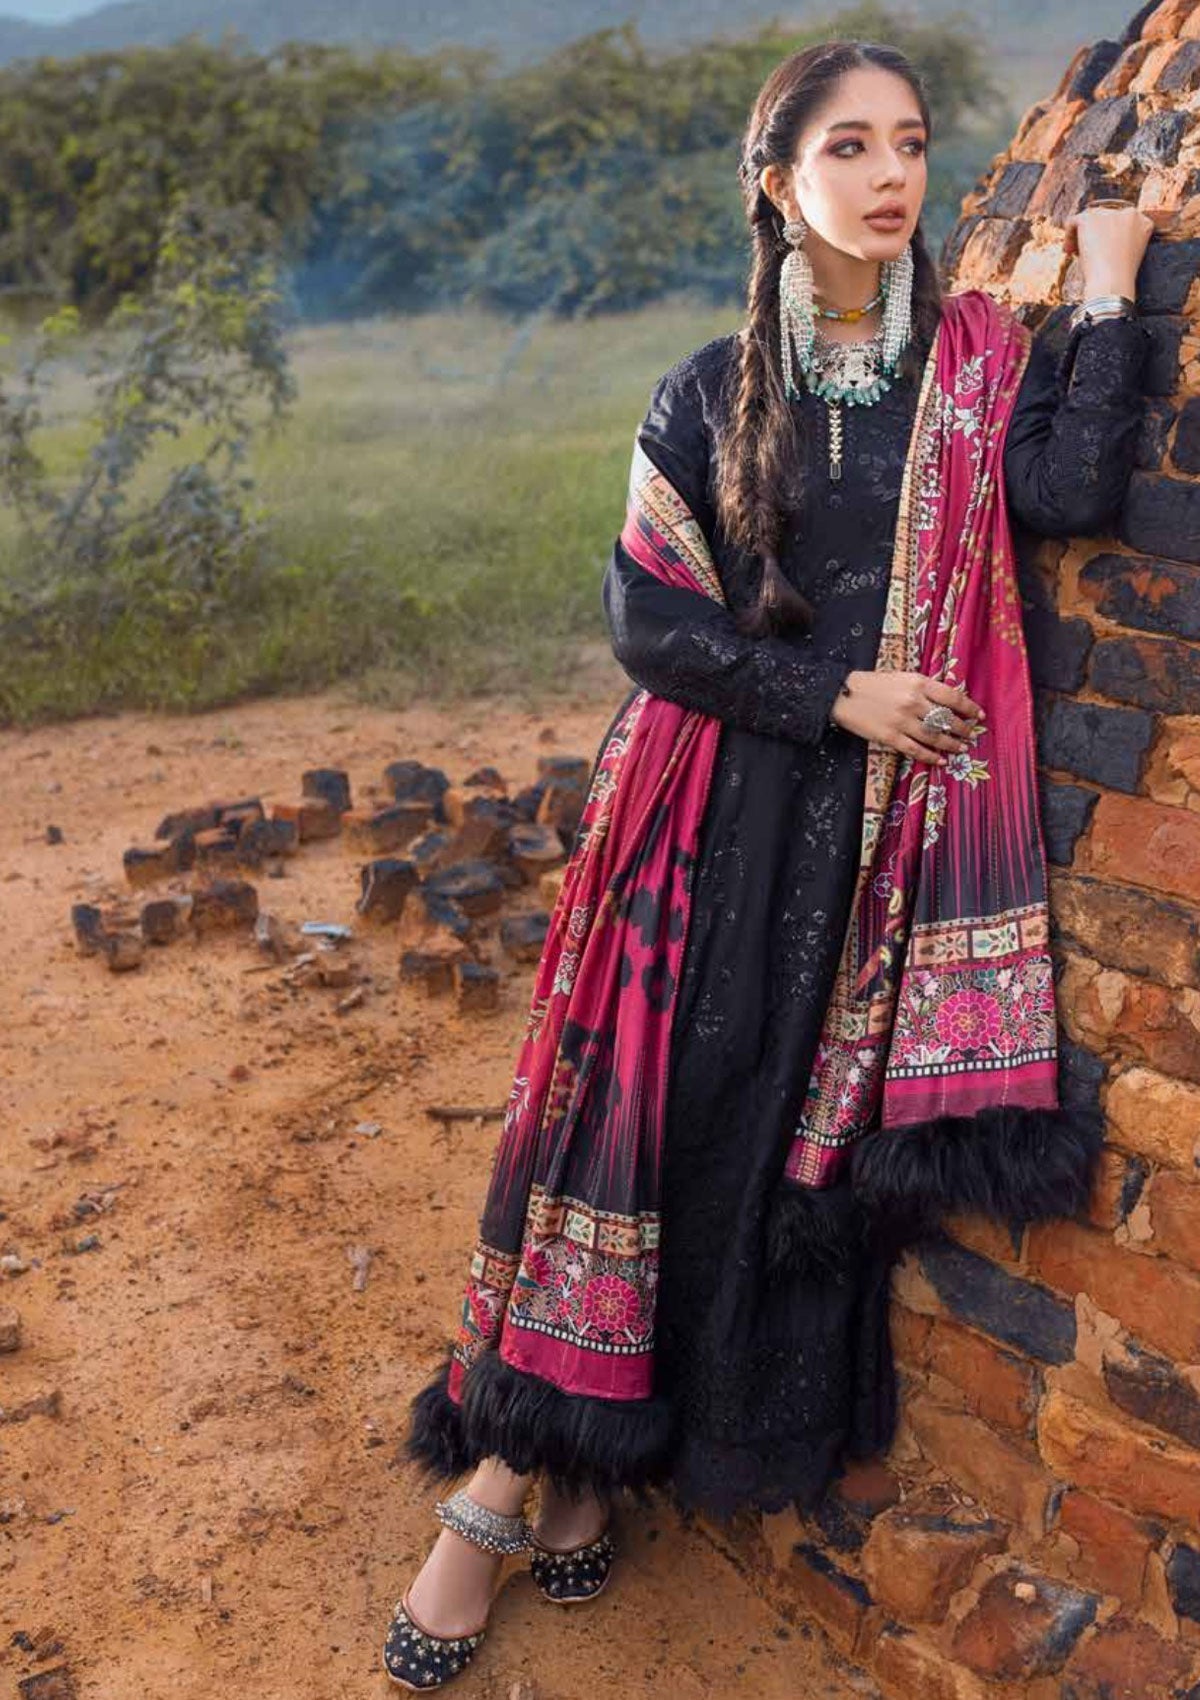 Winter Collection - Nureh - Maya - Heerni - Linen - NW#65 available at Saleem Fabrics Traditions